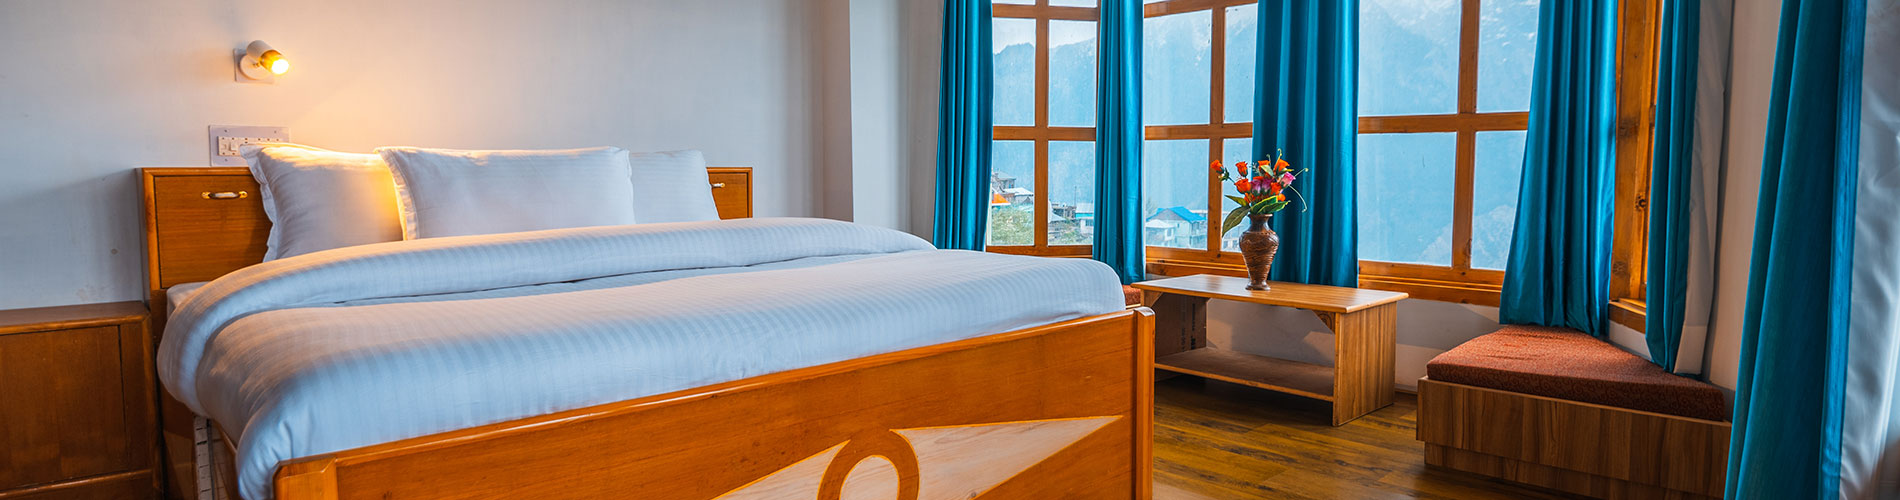 affordable-rooms-at-hotel-kalpa-deshang-kinnaur